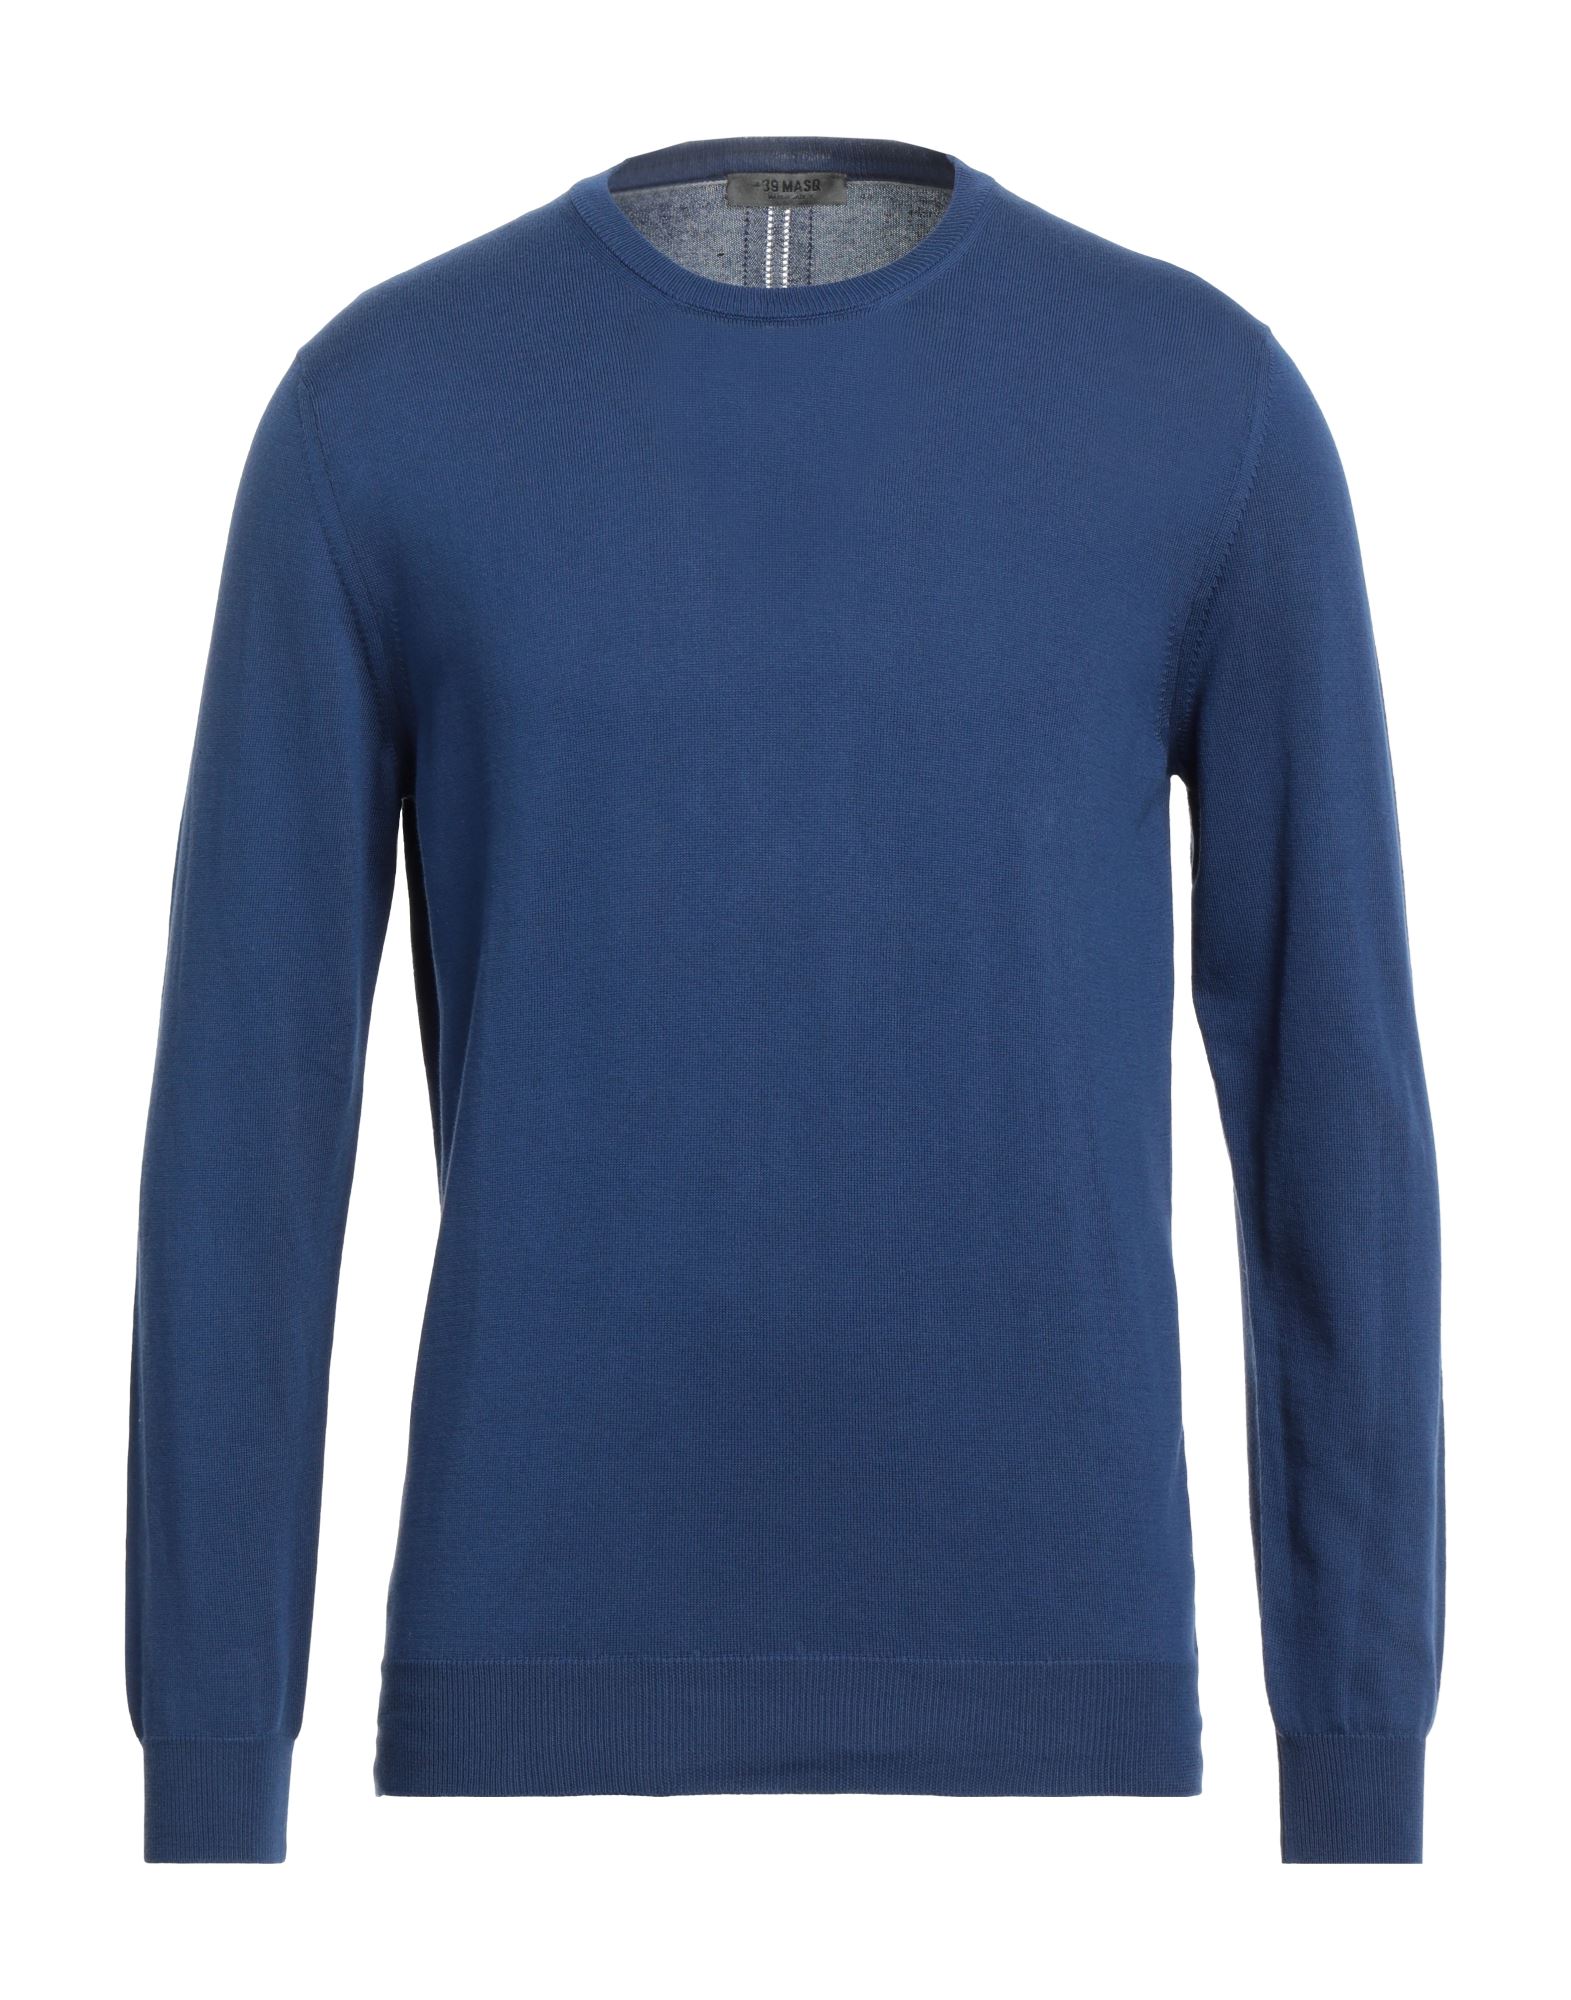 +39 Masq Man Sweater Navy Blue Size M Cotton